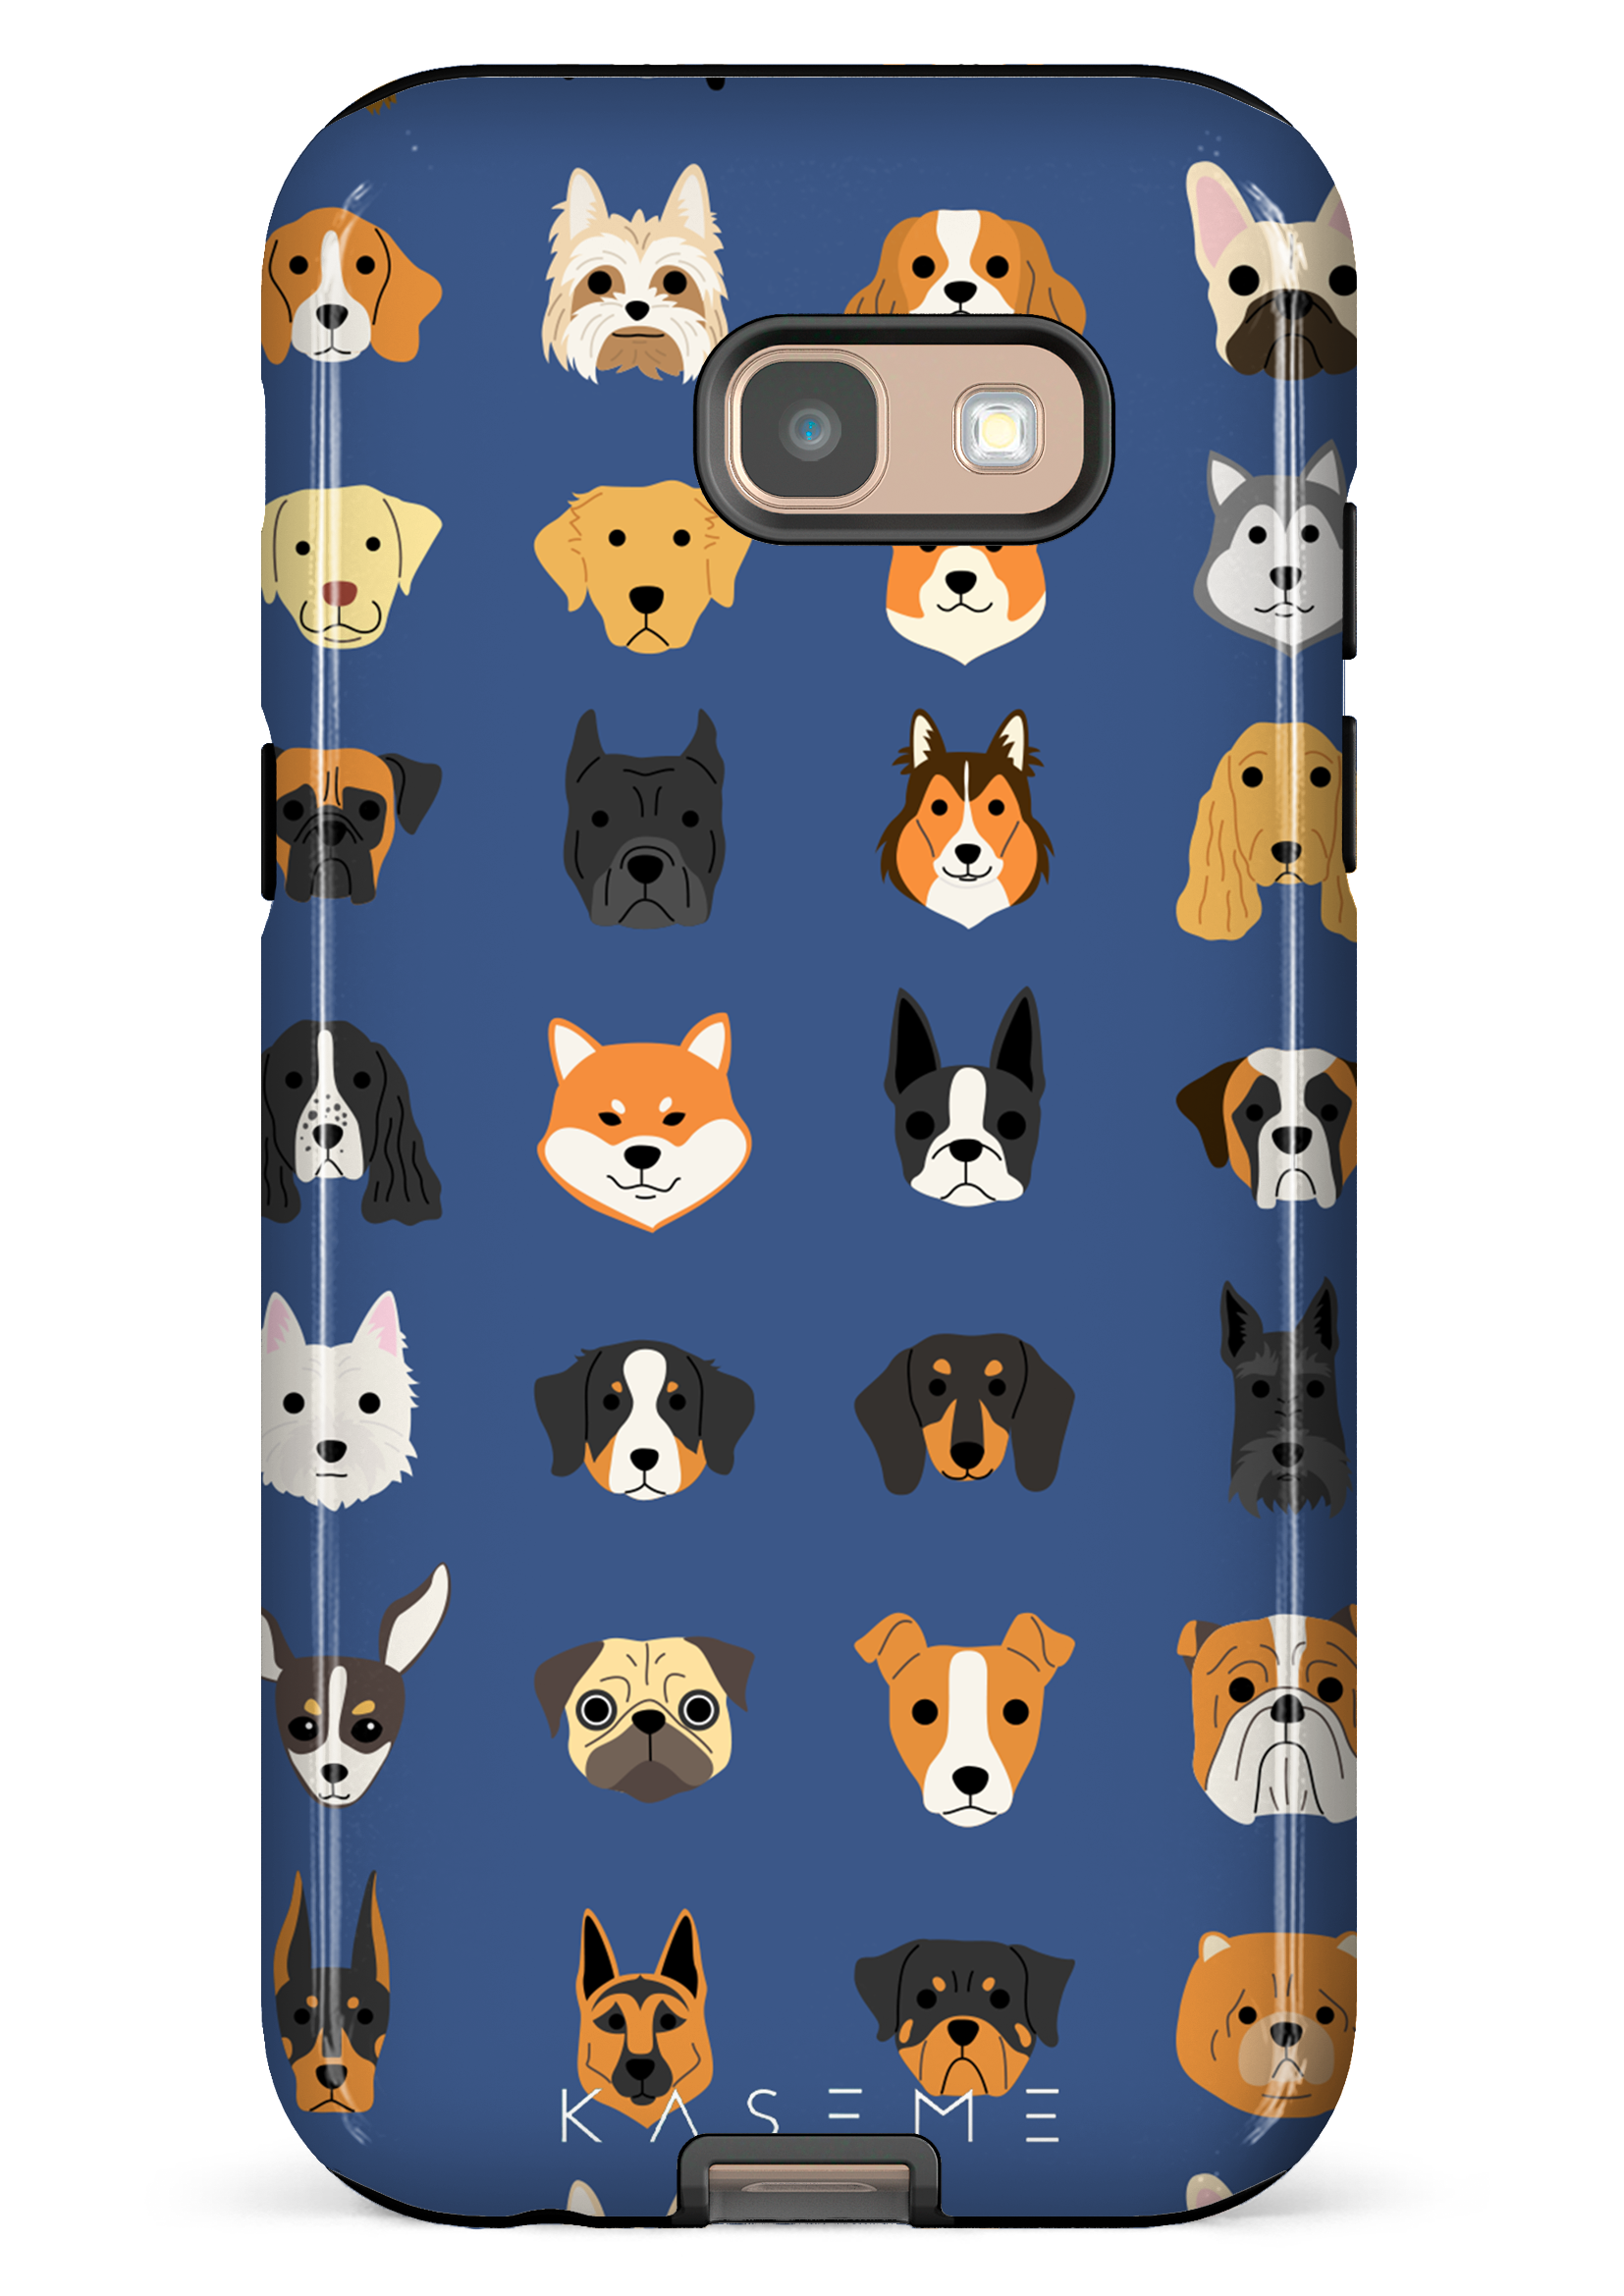 Pup blue - Galaxy A5 (2017)